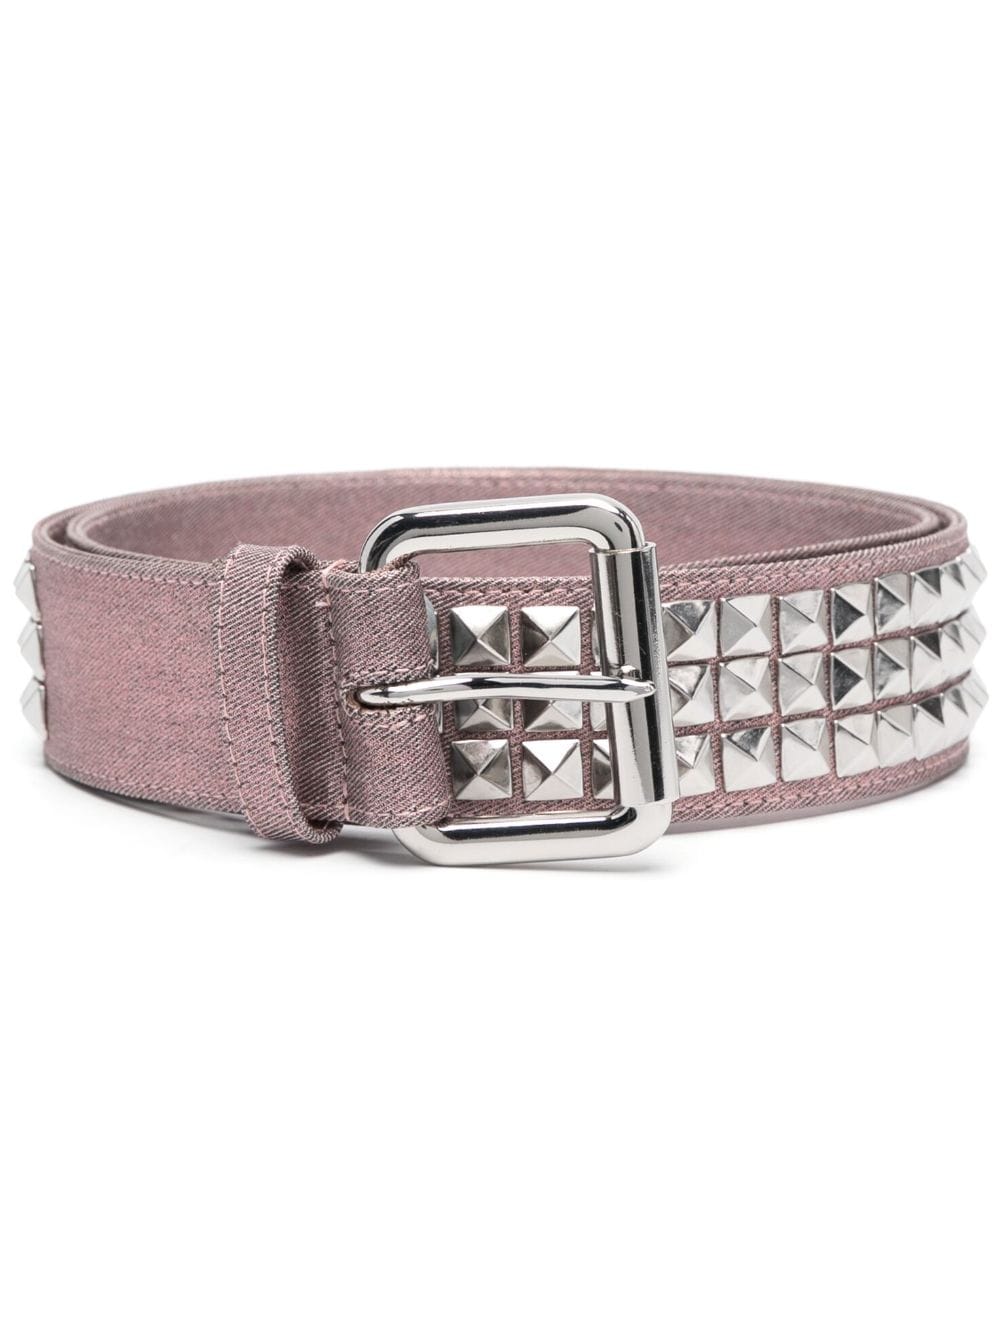 metallic stud-embellished belt